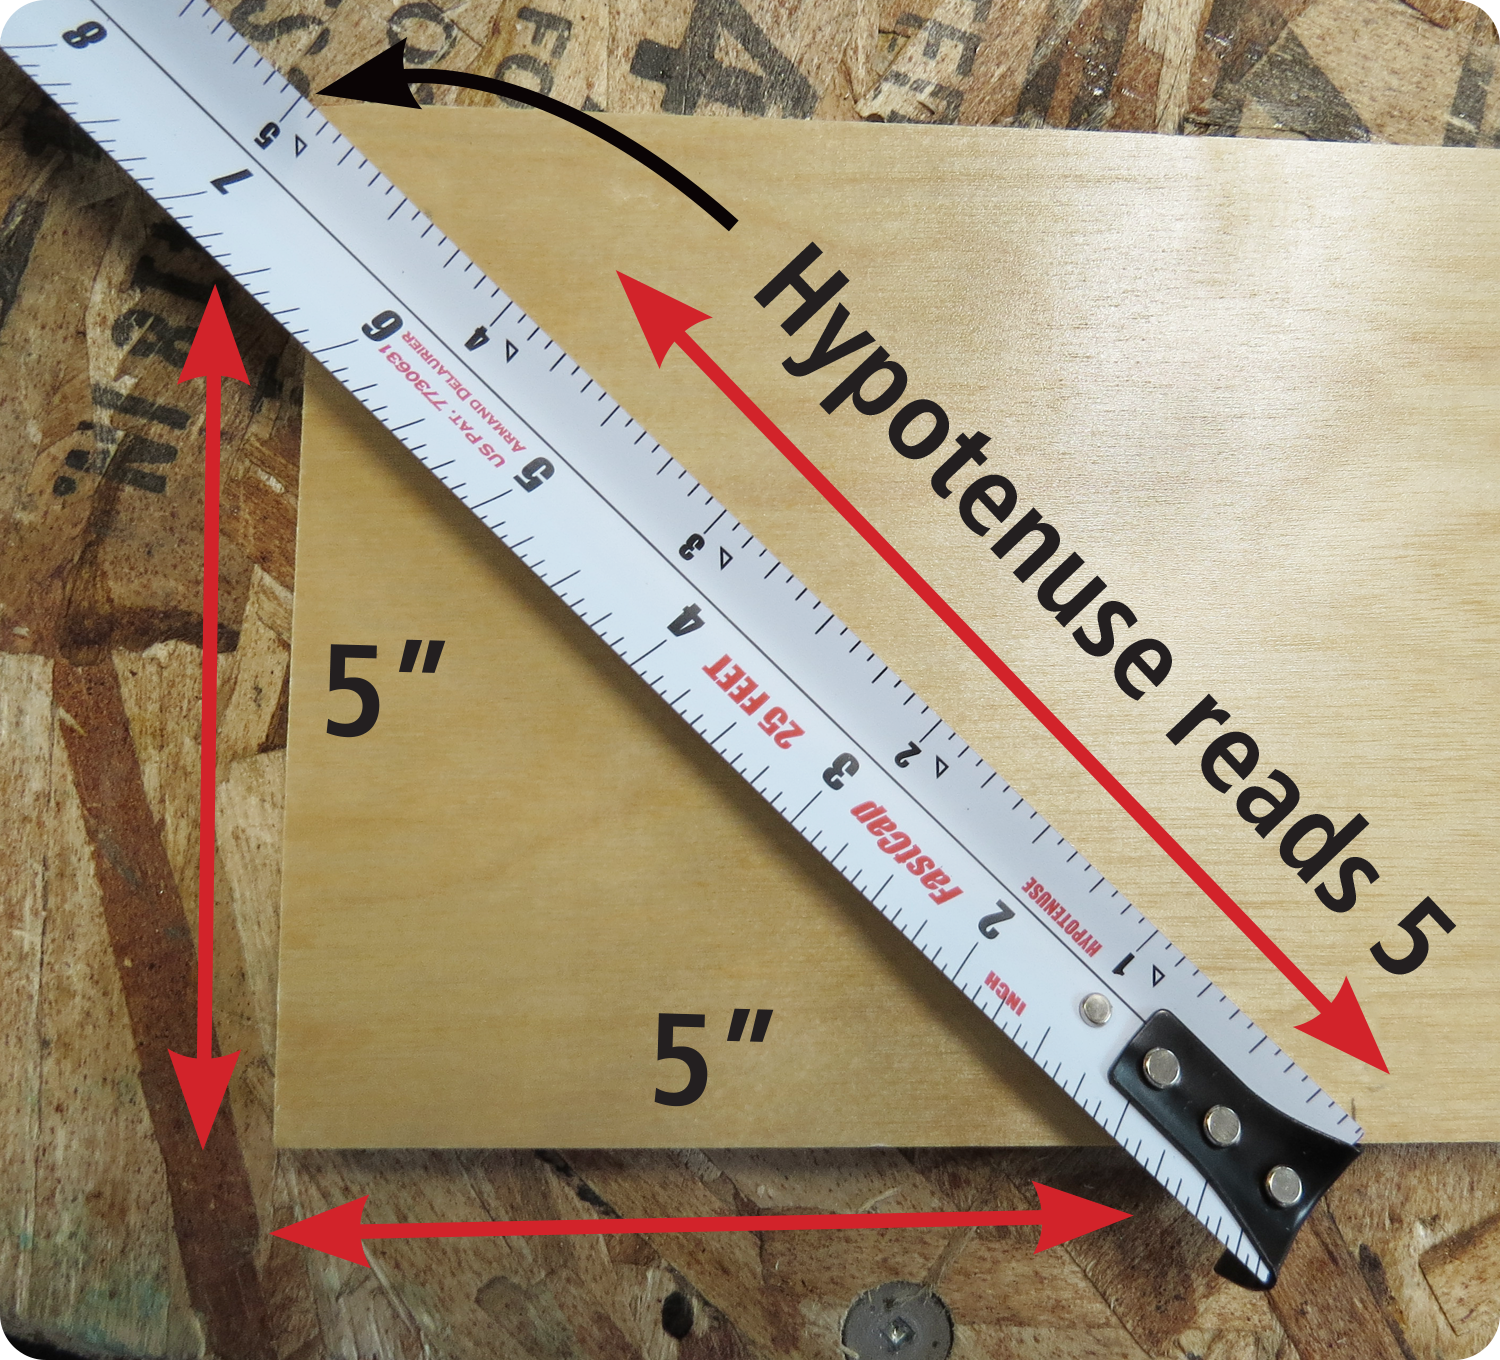 FastCap ProCarpenter Tape Measure Standard-Reverse 25′